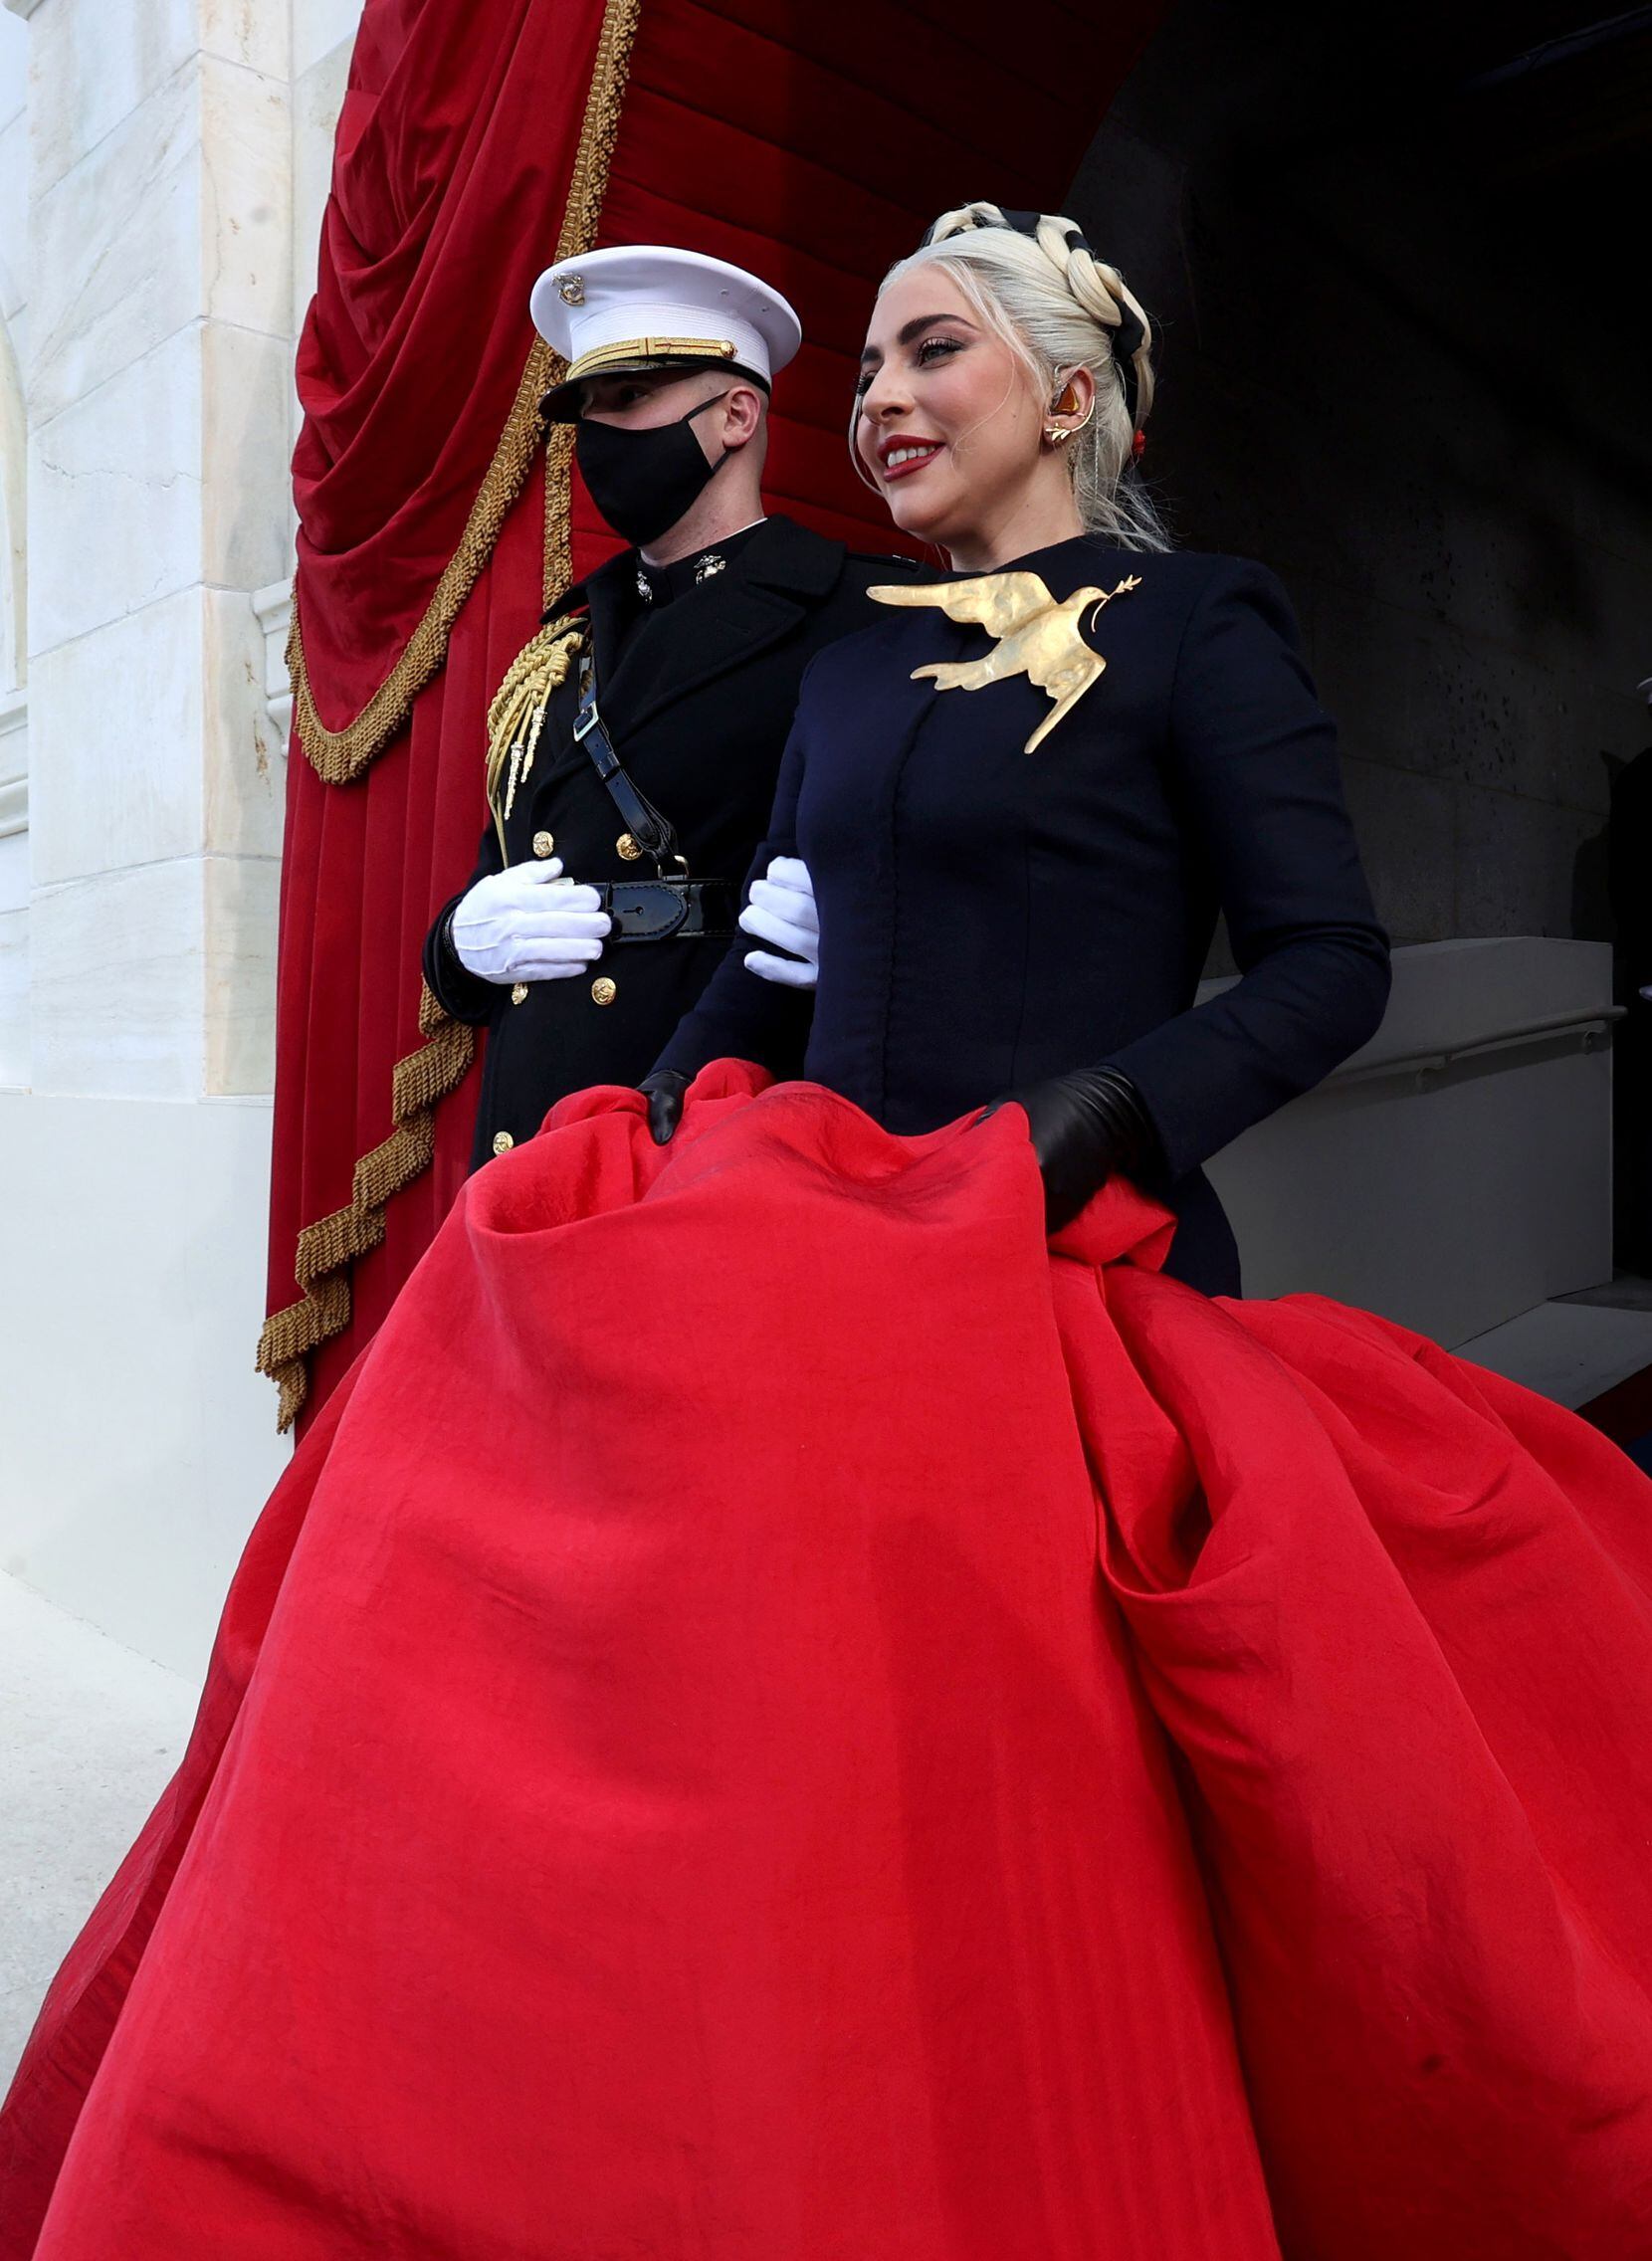 Lady Gaga arrives for the inauguration of U.S. President-elect Joe Biden at the U.S. Capitol...